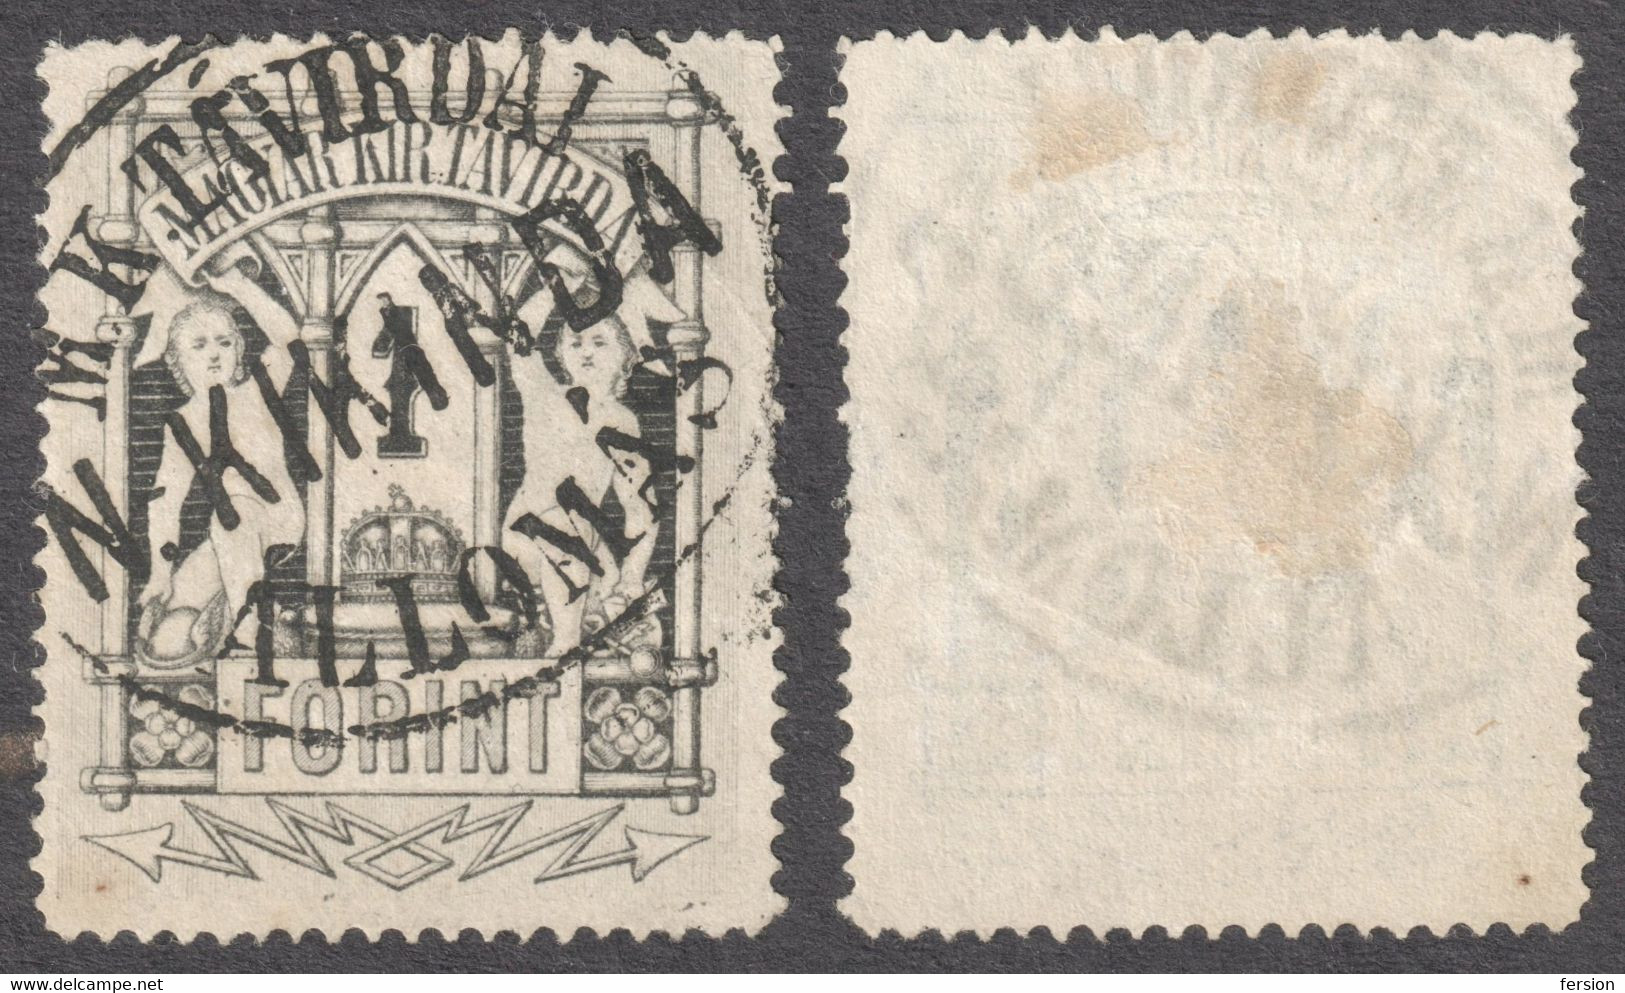 Kikinda Nagykikinda Postmark Serbia - TELEGRAPH Telegram TAX Stamp - 1873 HUNGARY - Copper Print 1 Ft - Used - Telegraph